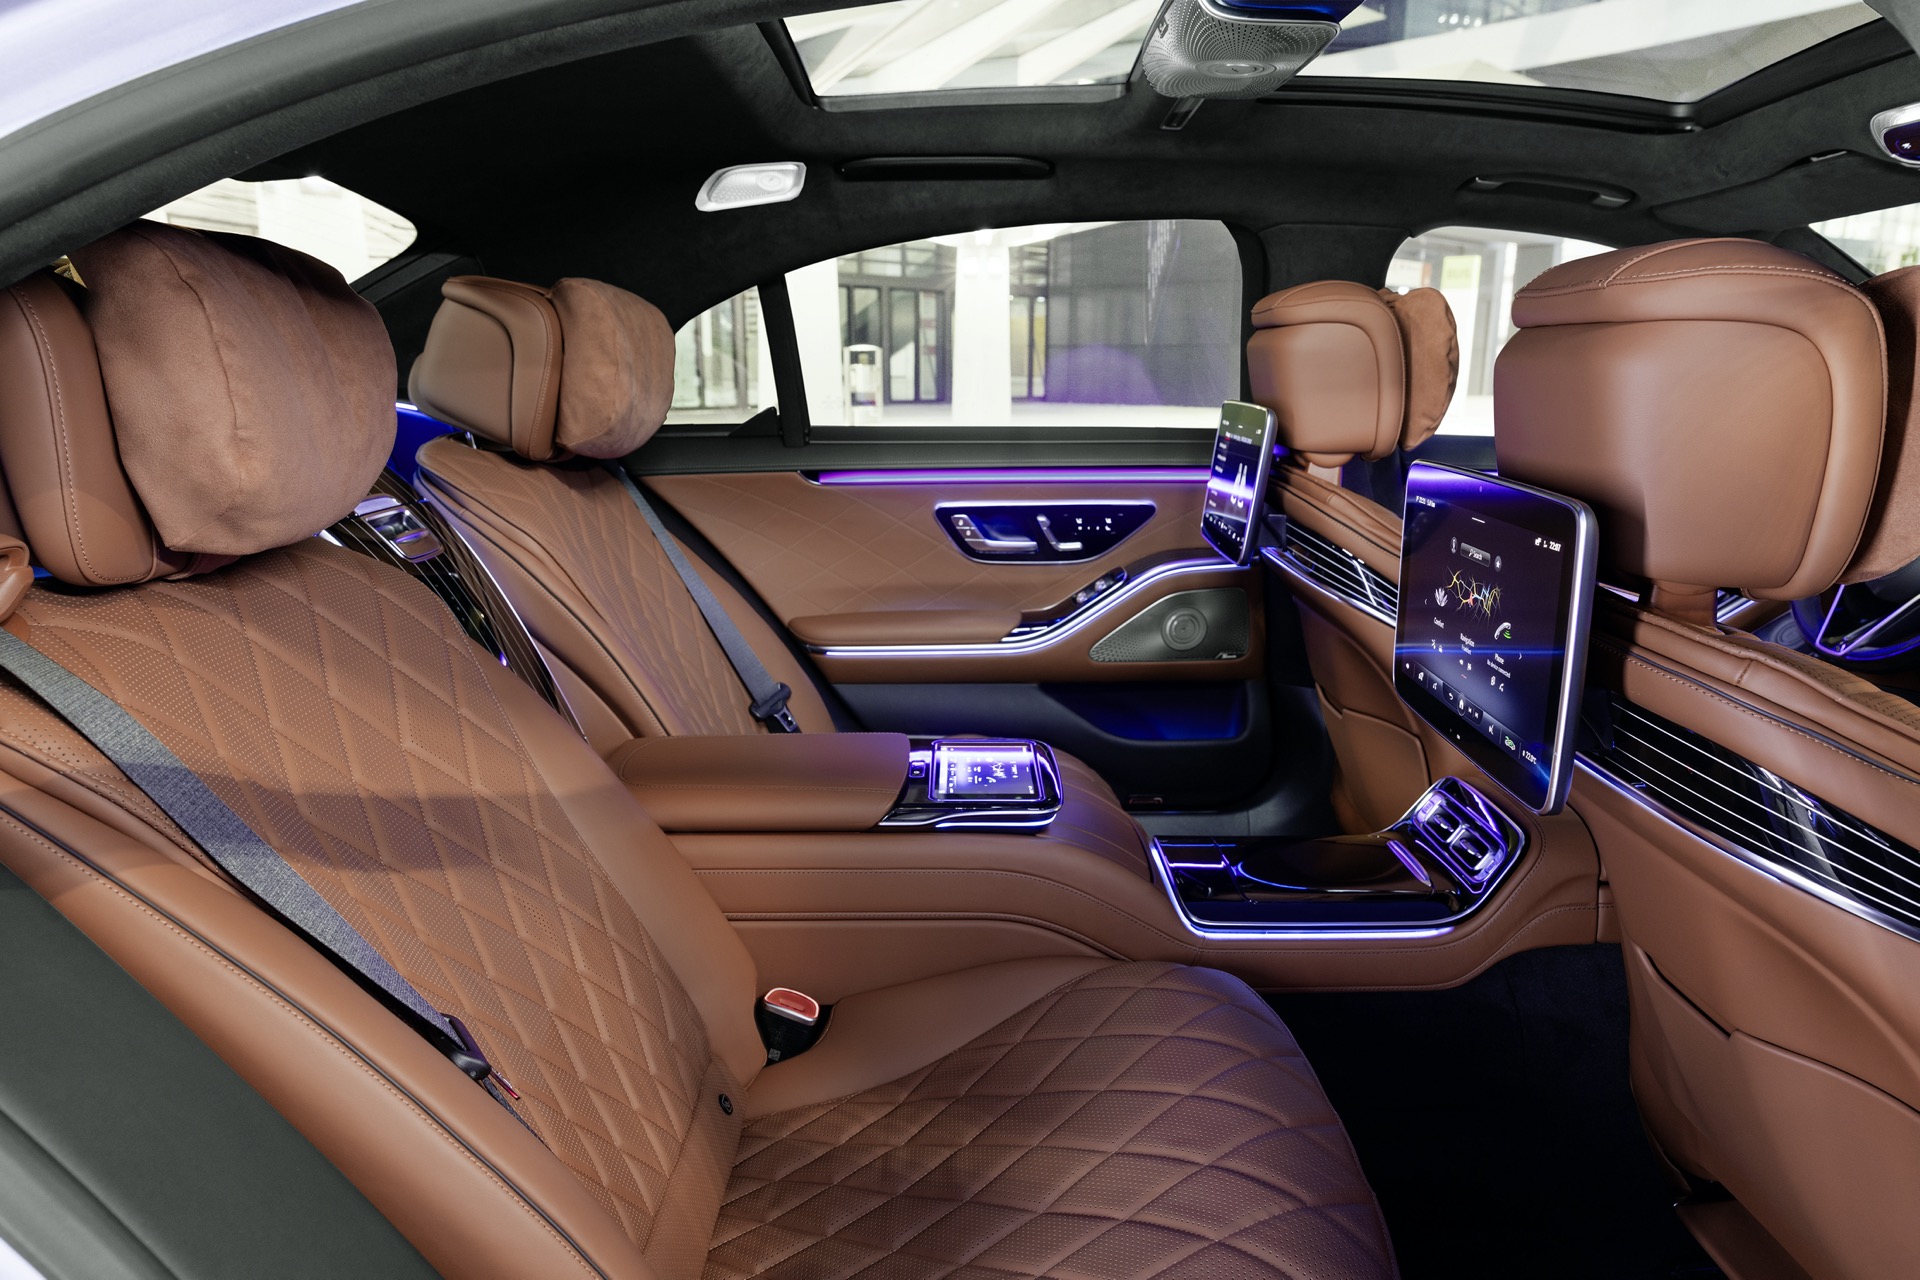 New MercedesBenz SClass Revealed The SeventhGeneration GTspirit